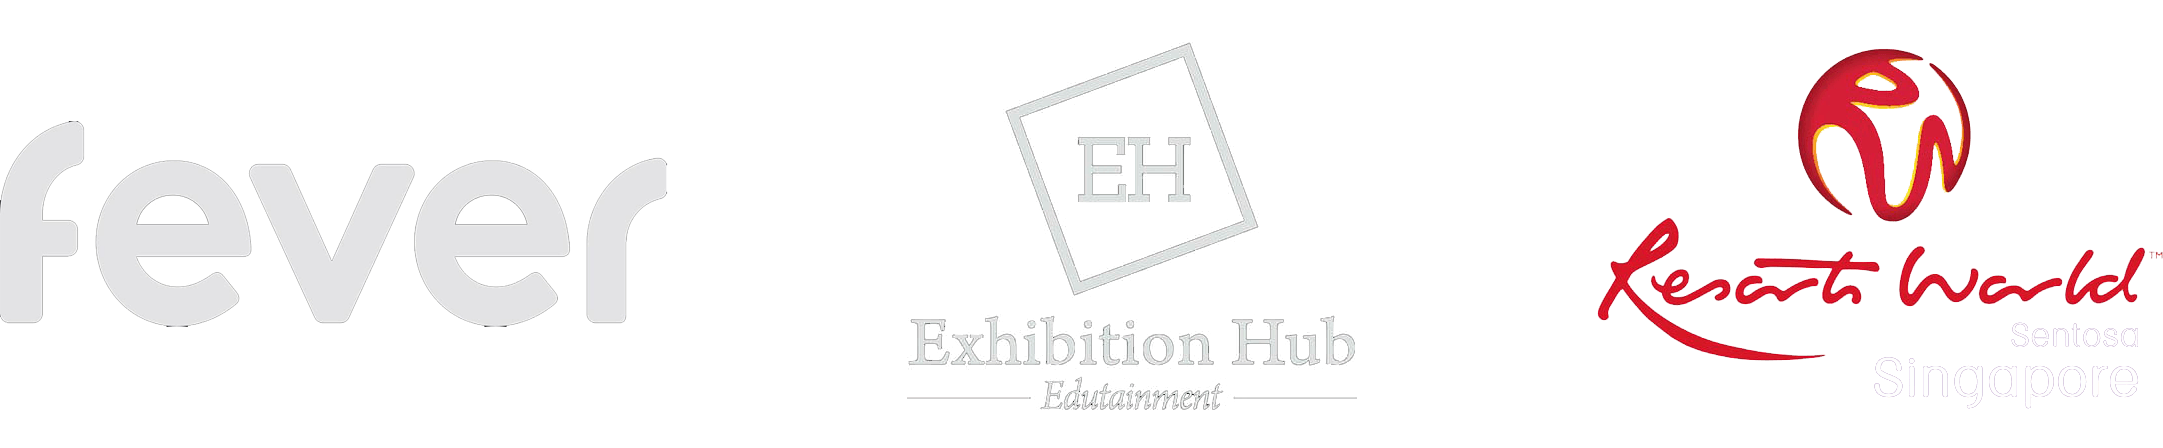 Fever - Exhibition Hub